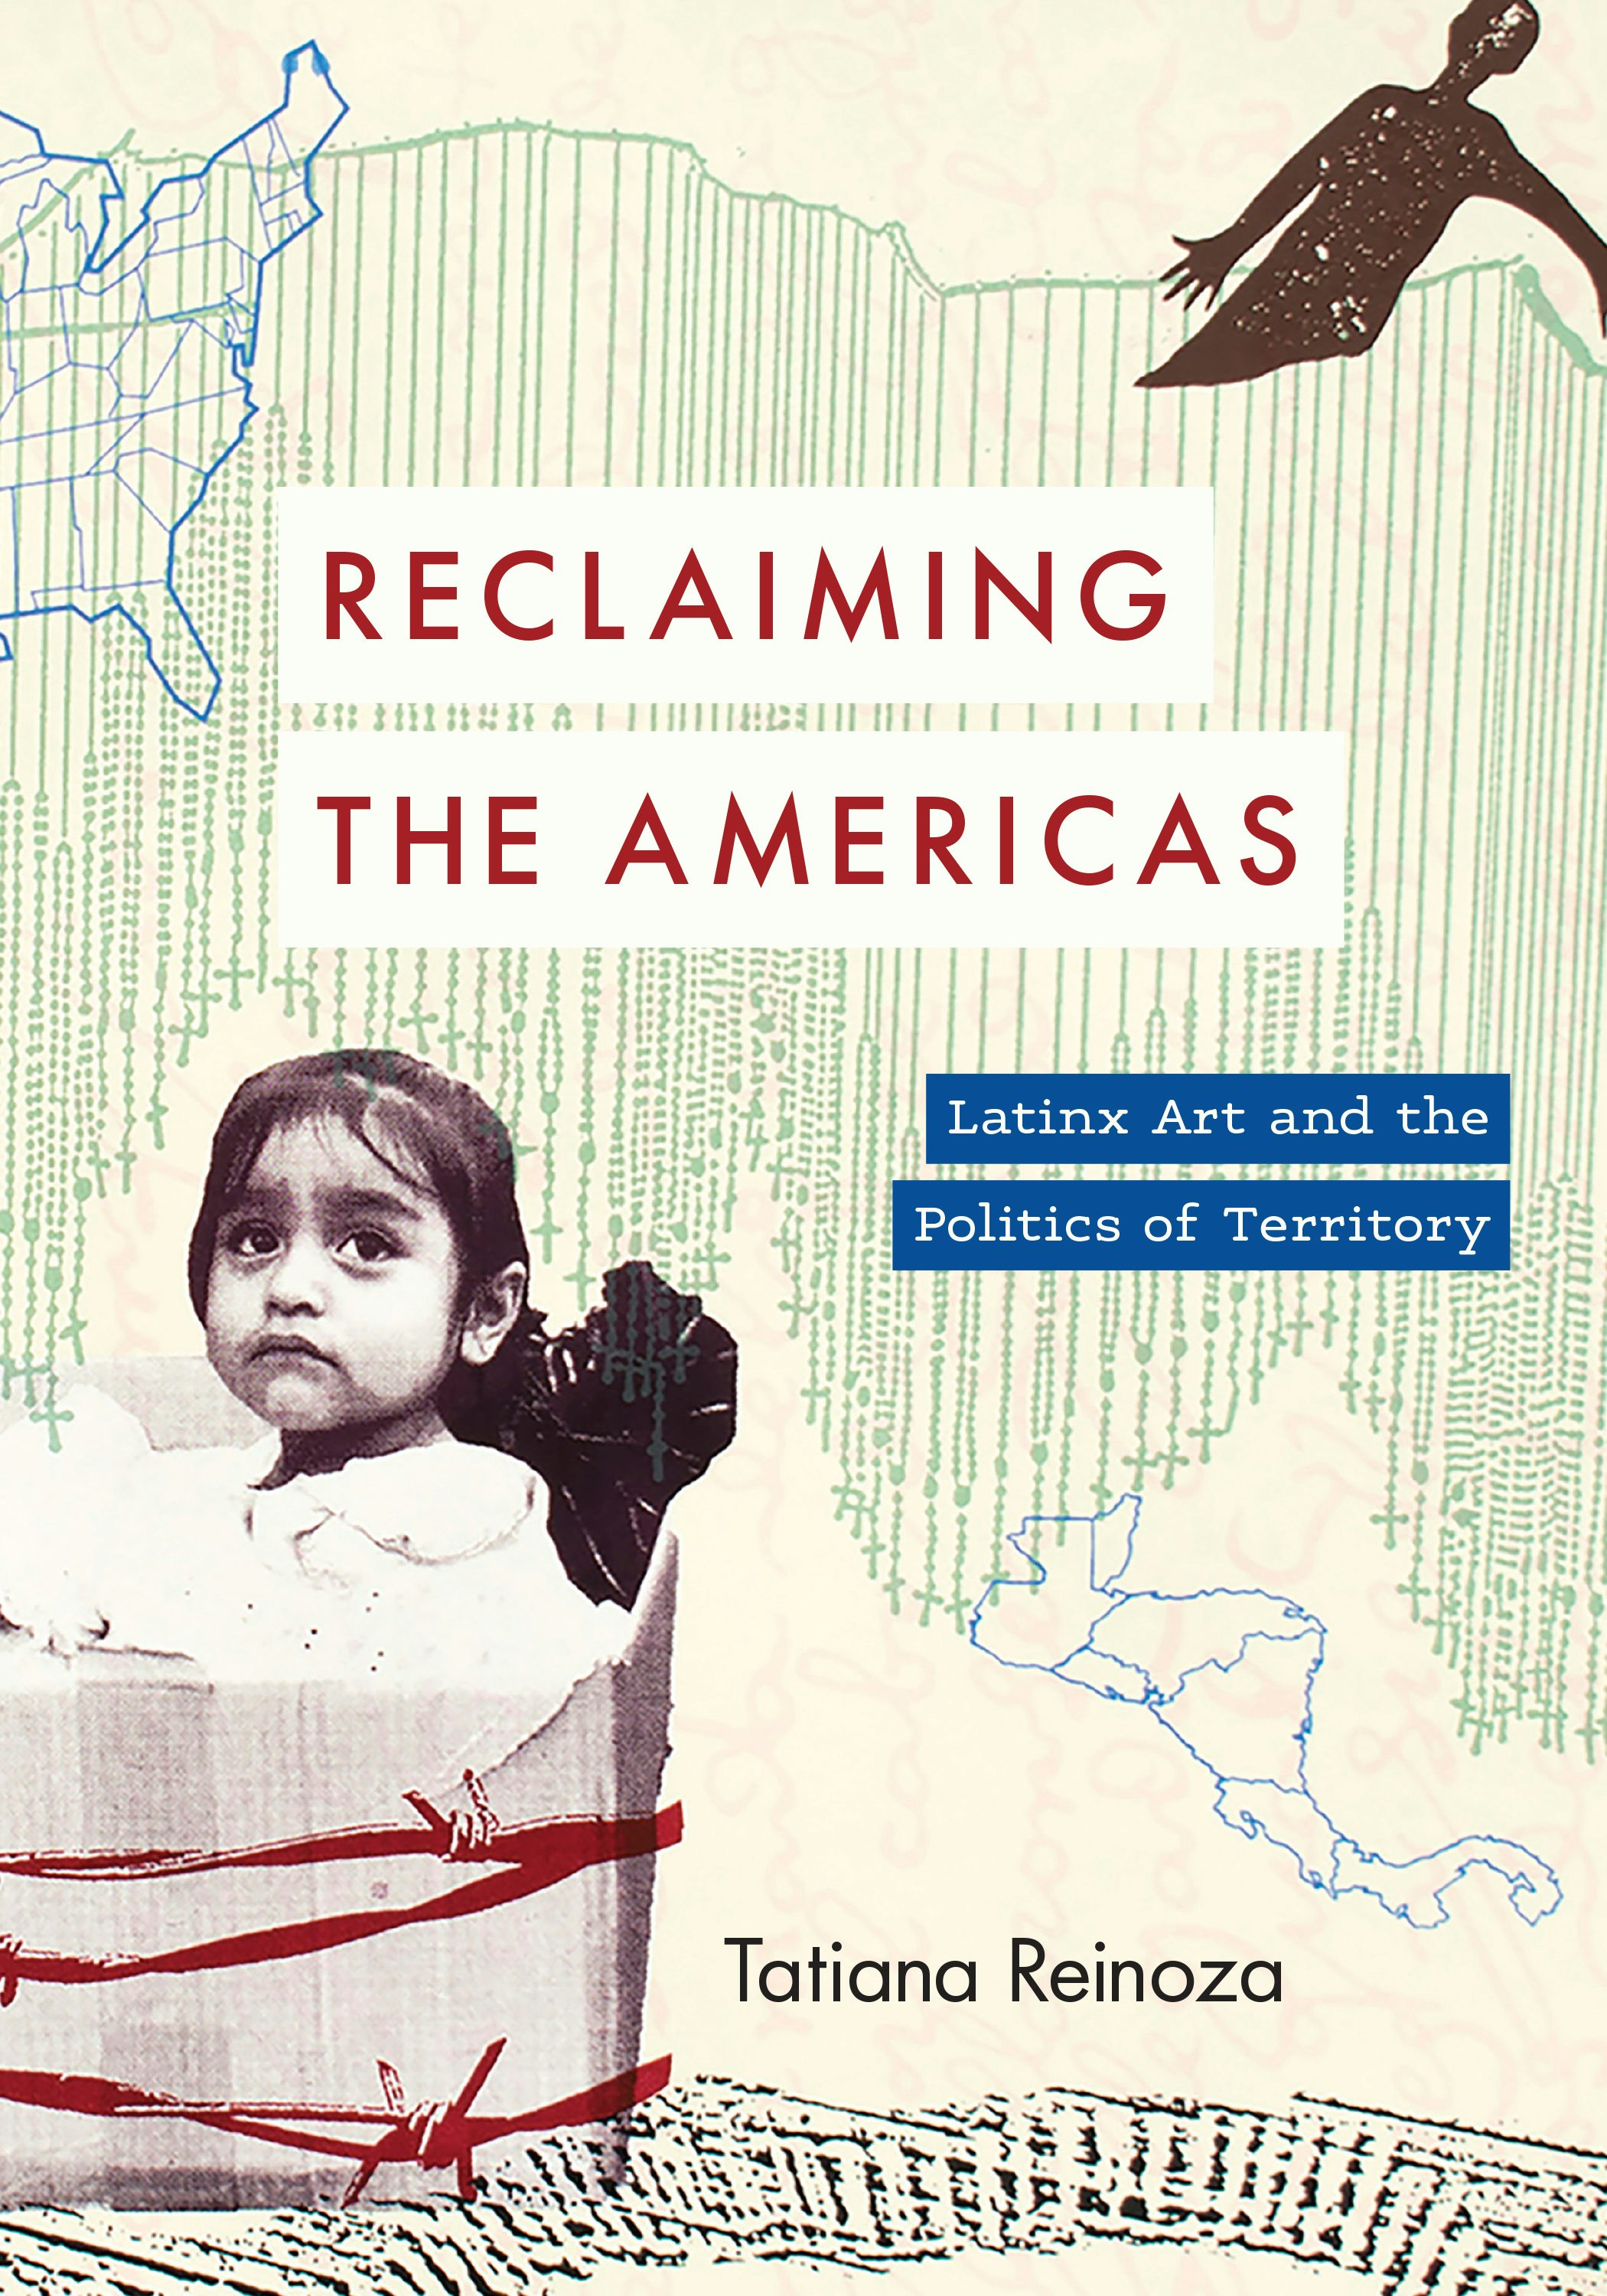 Reclaiming the Americas: Latinx Art and the Politics of Territory by Tatiana Reinoza